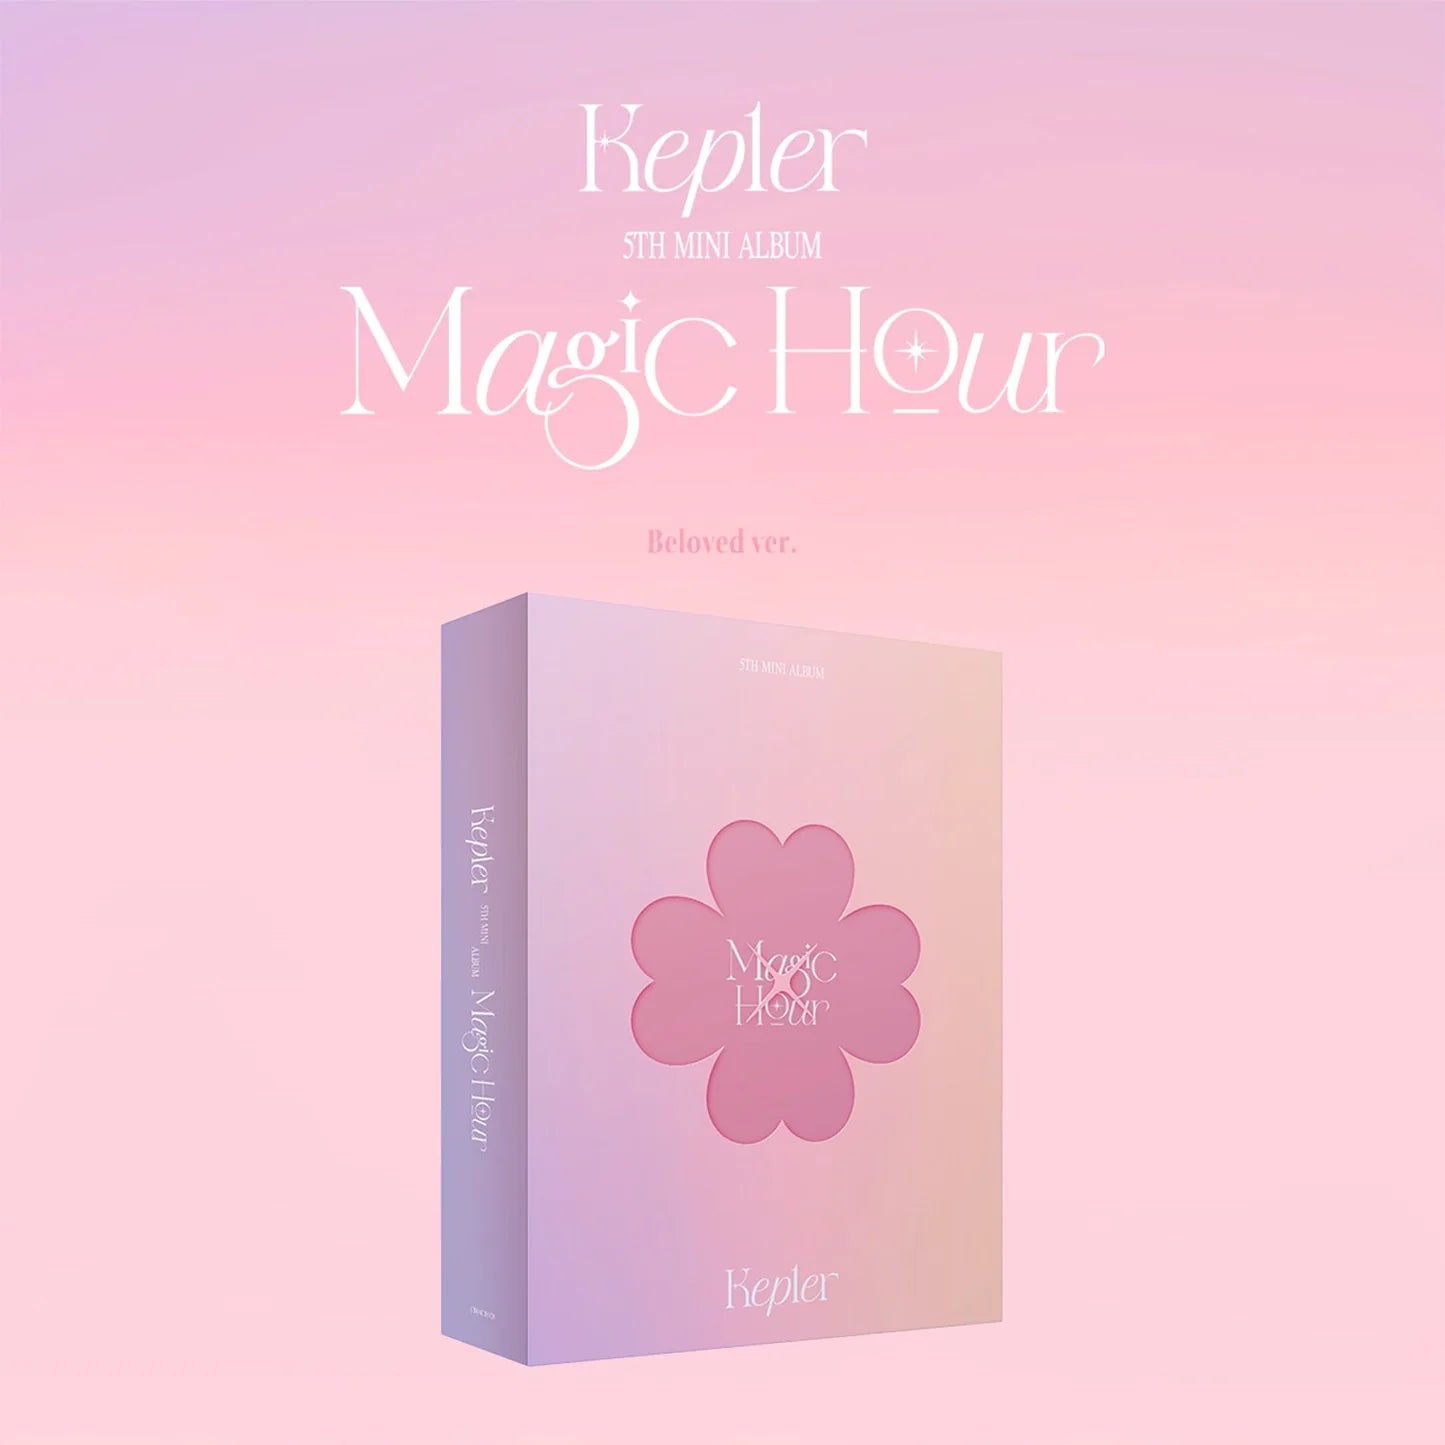 Kep1er - 5th Mini-Album 'Magic Hour'